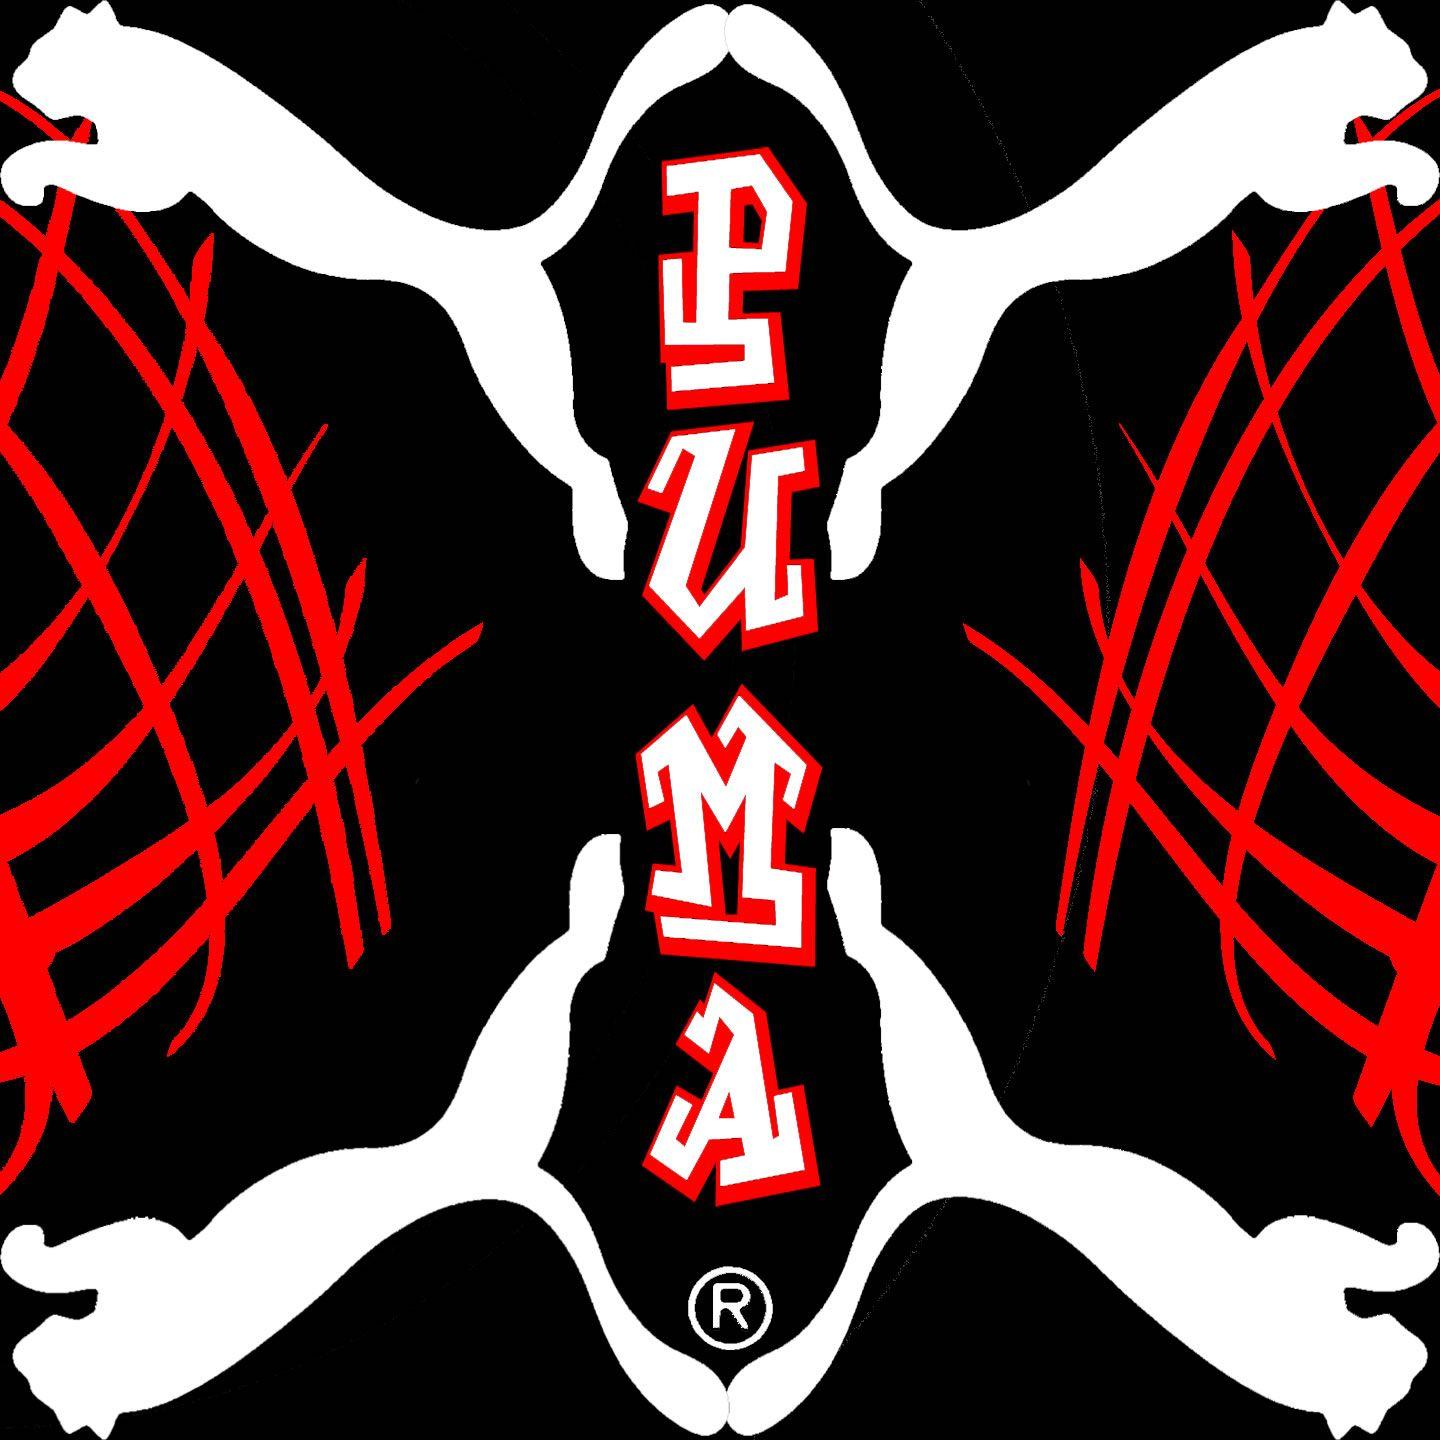 Cool Puma Logo - Puma logo designs | Shabizzle's Blog